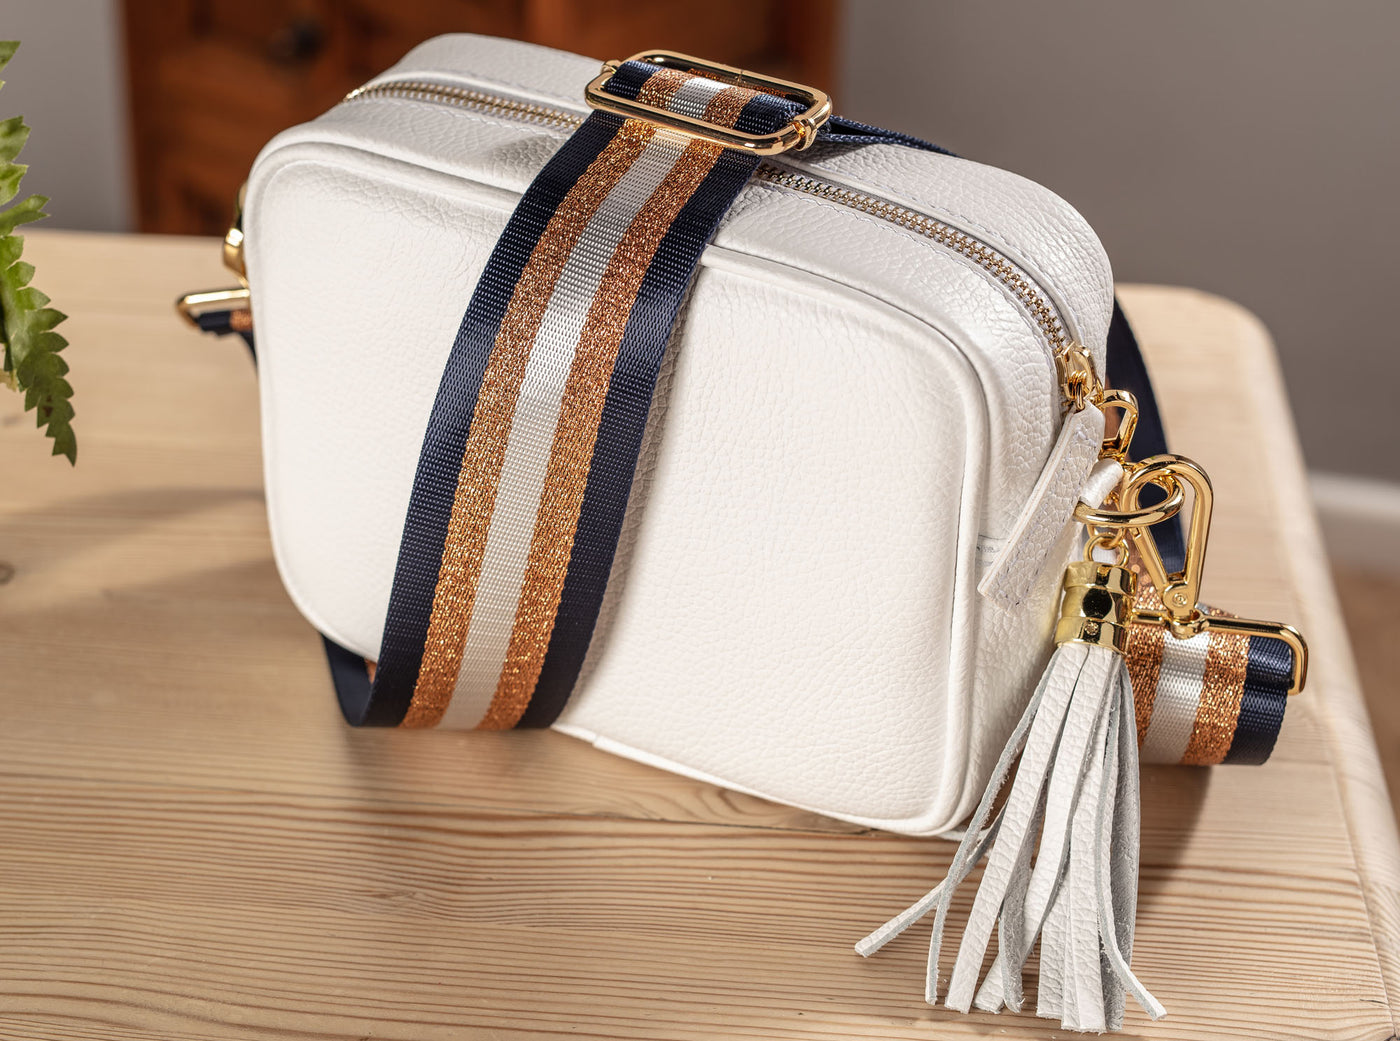 Elie Beaumont Designer Leather Crossbody Bag - White (GOLD Fittings)